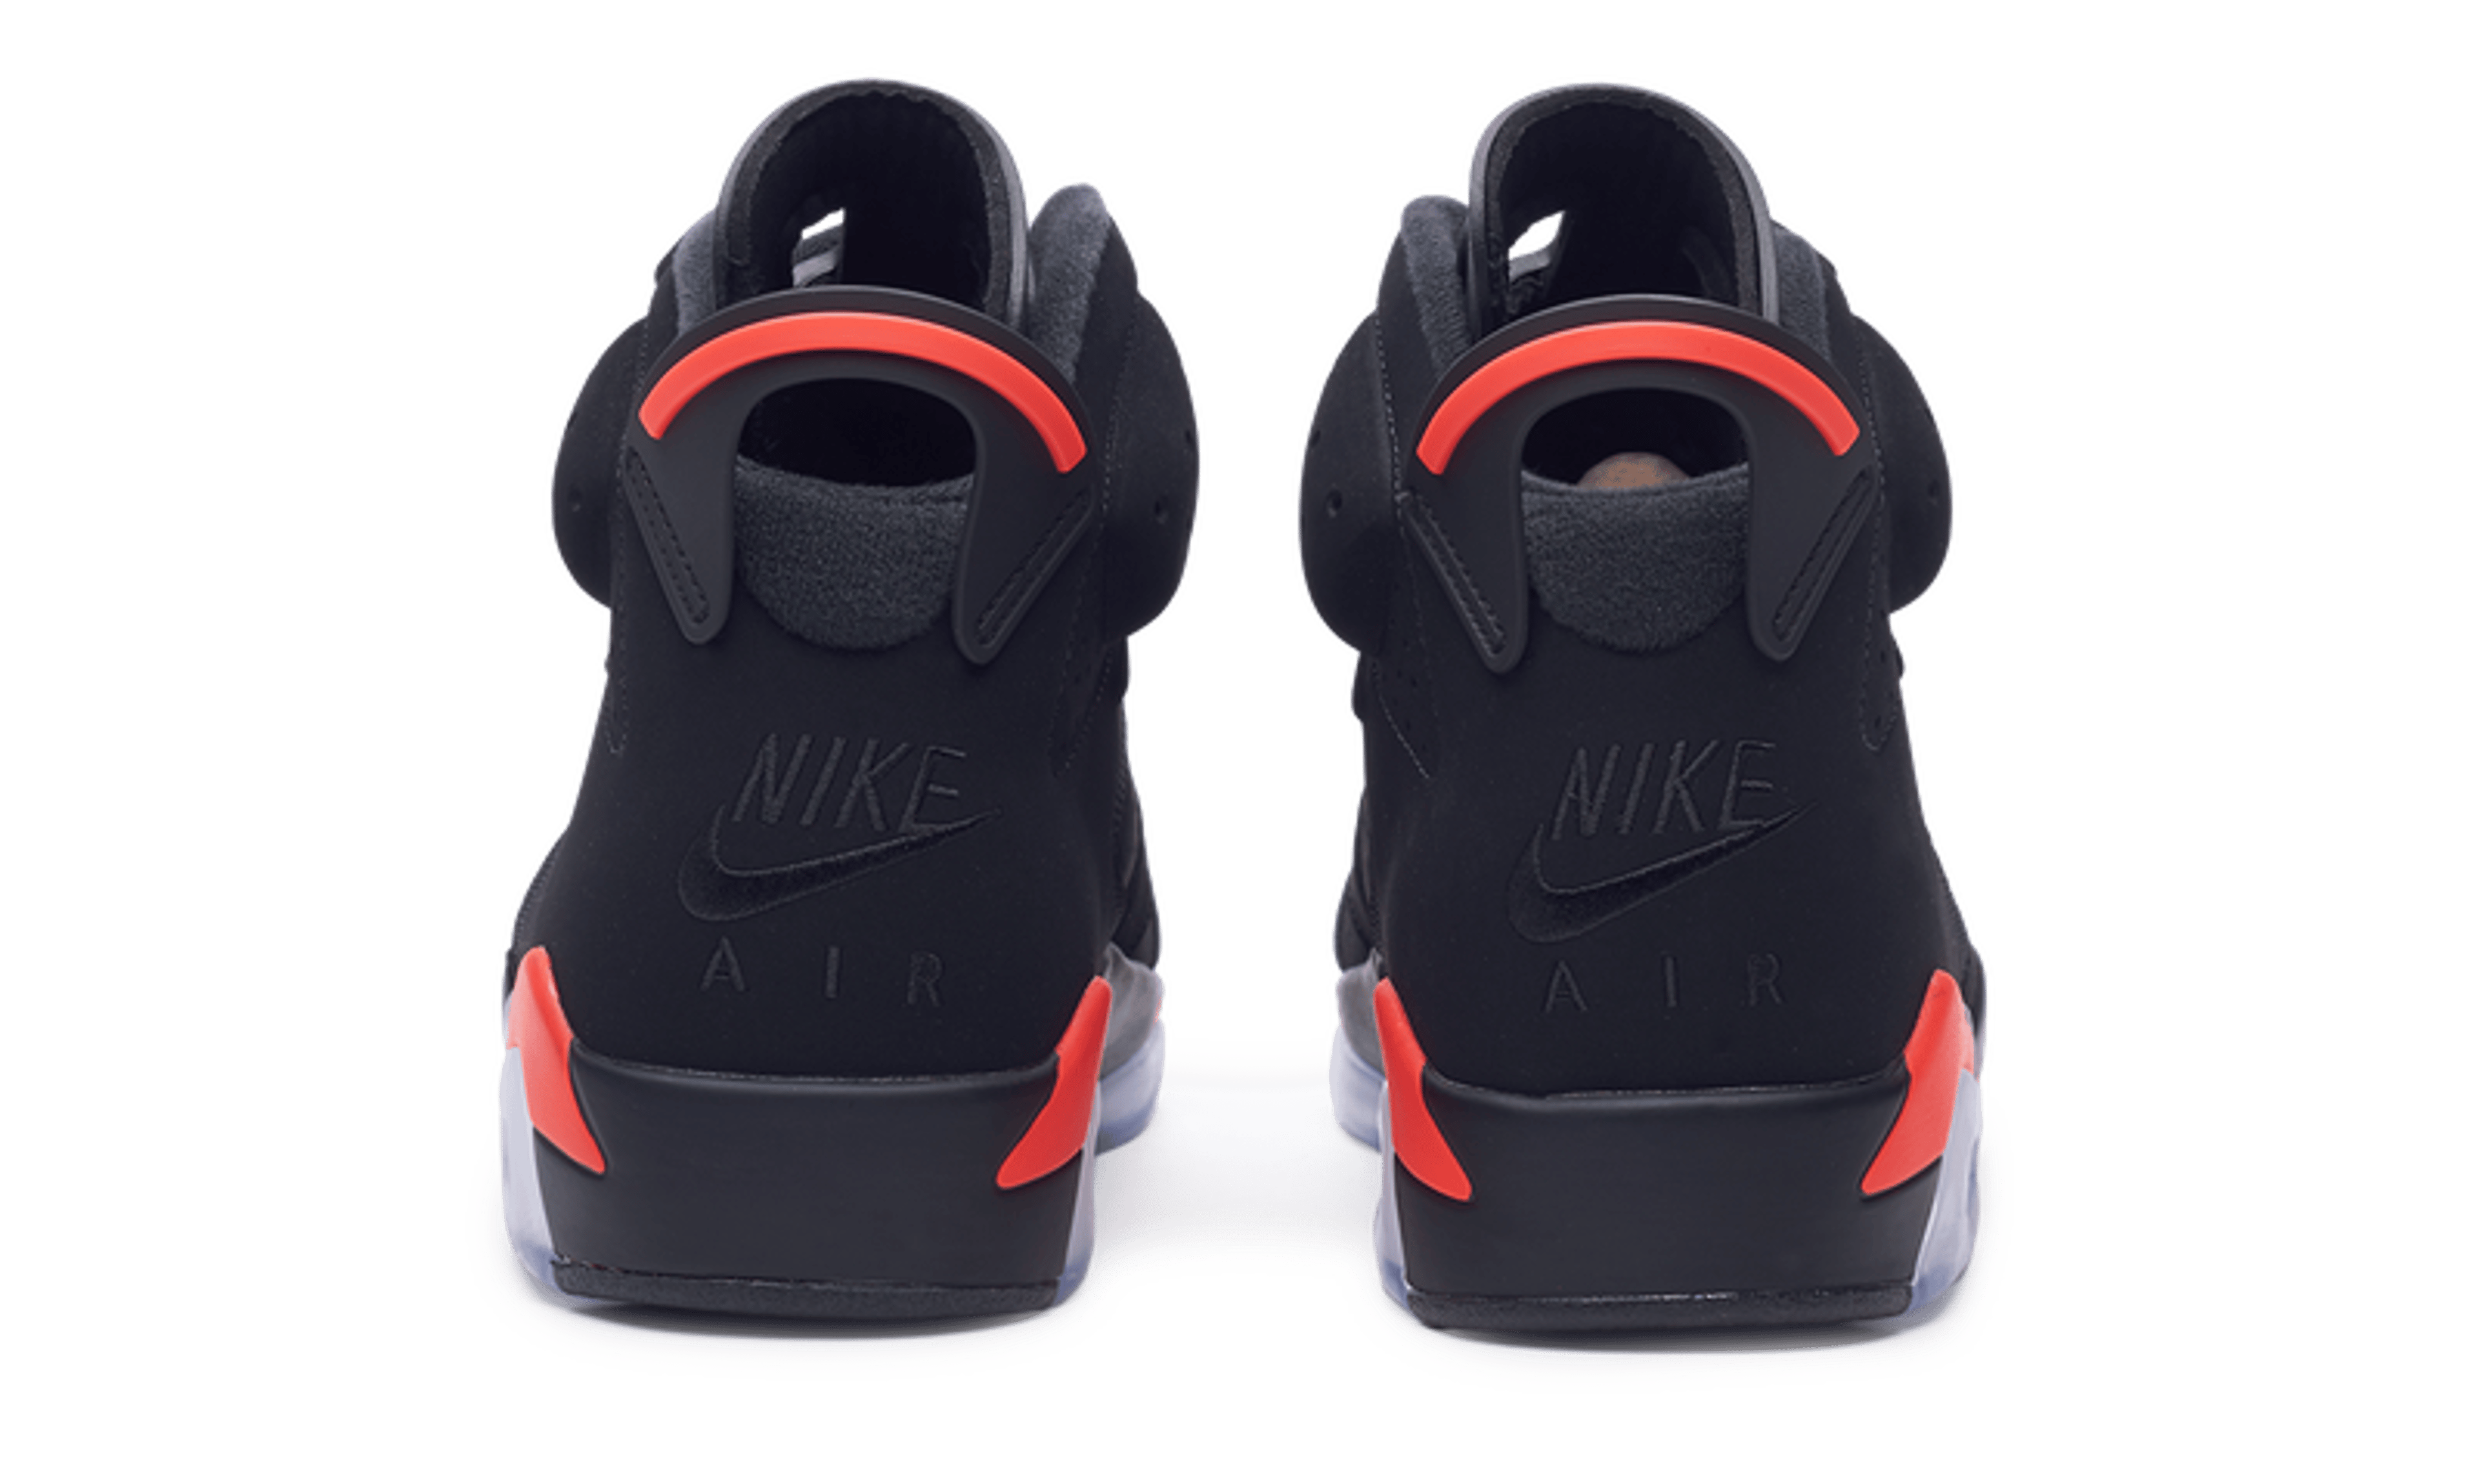 Alternate View 3 of Nike Jordan 6 Retro Black Infrared 2019 (384664-060) Men's Size 